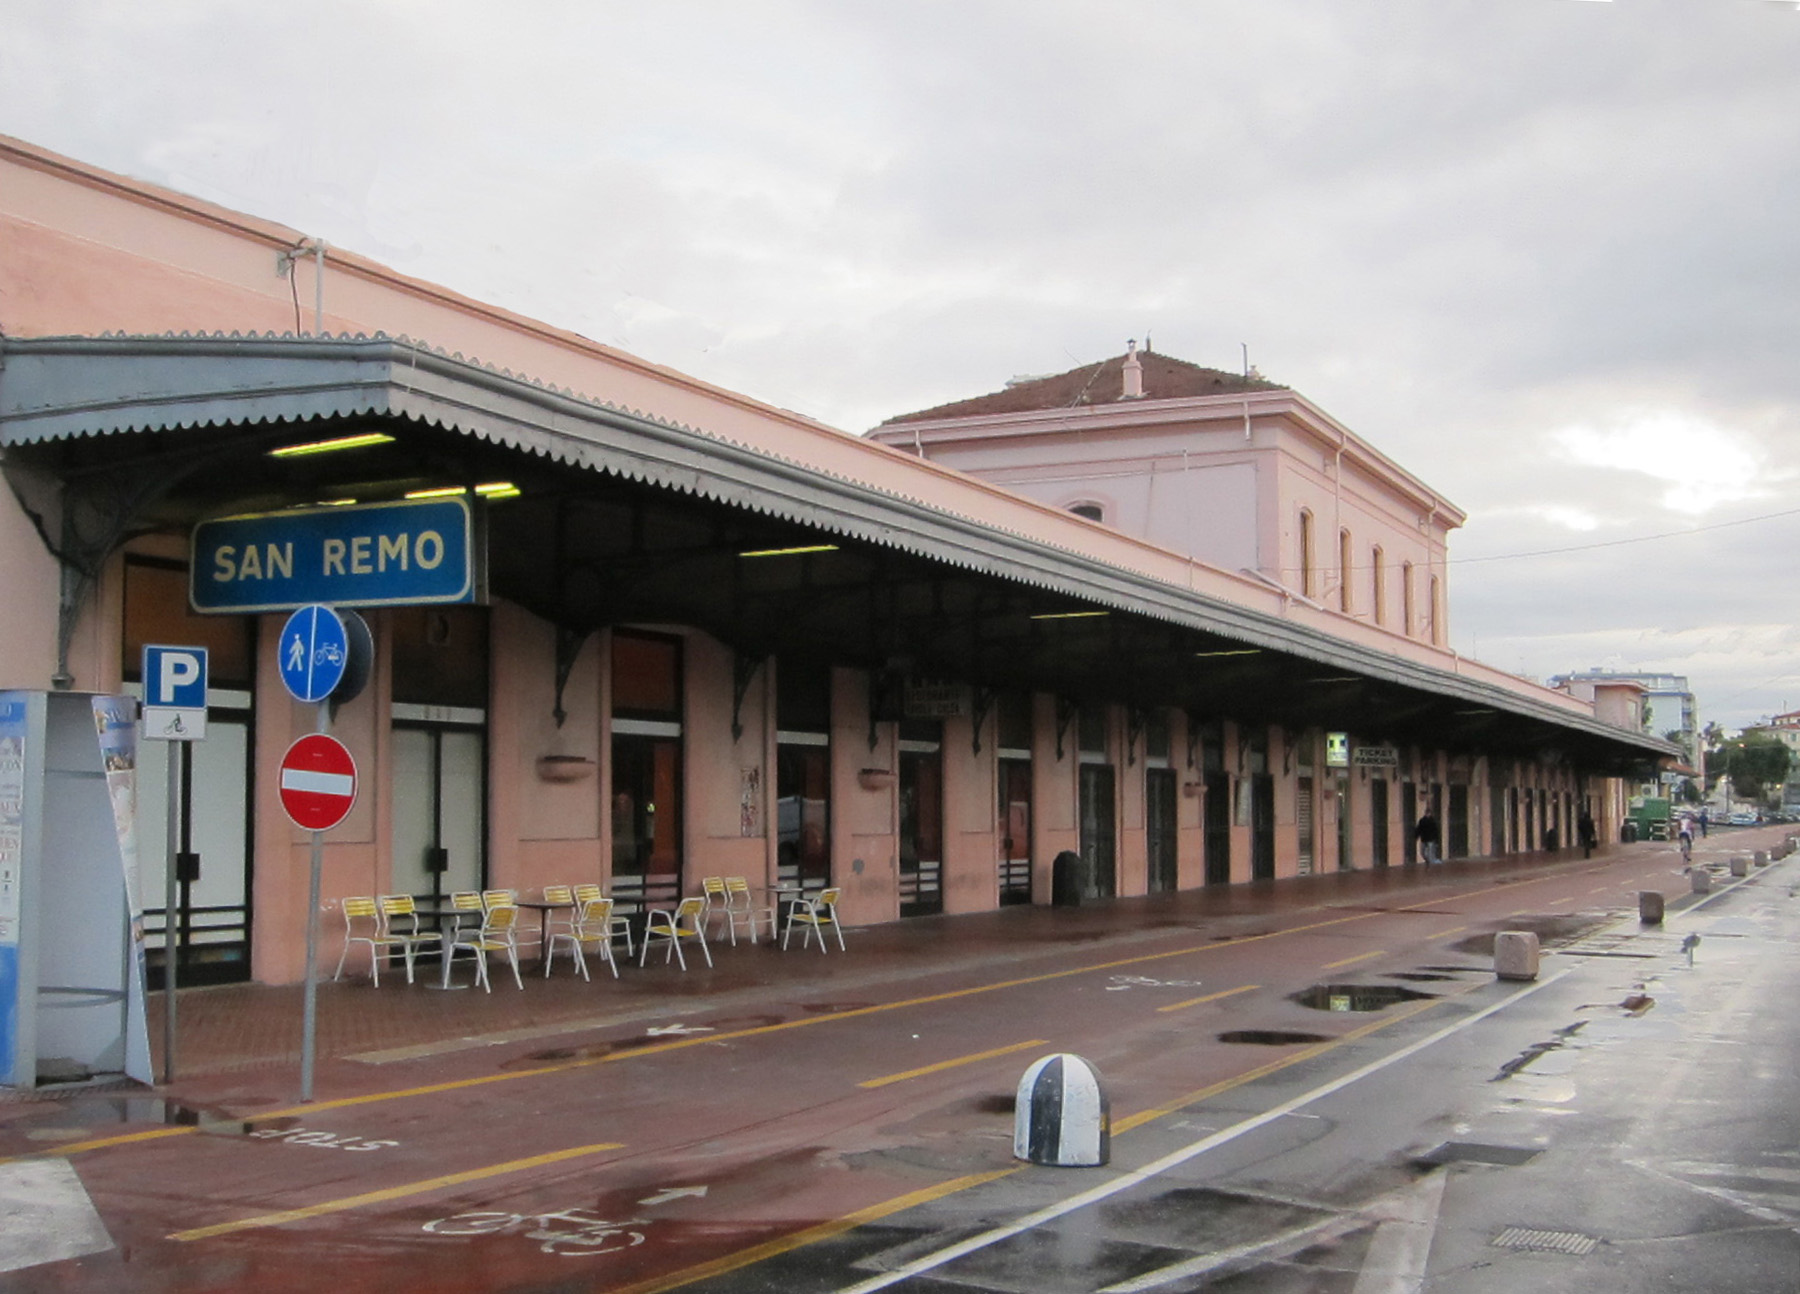 Sanremo railway station (1872) - Wikipedia